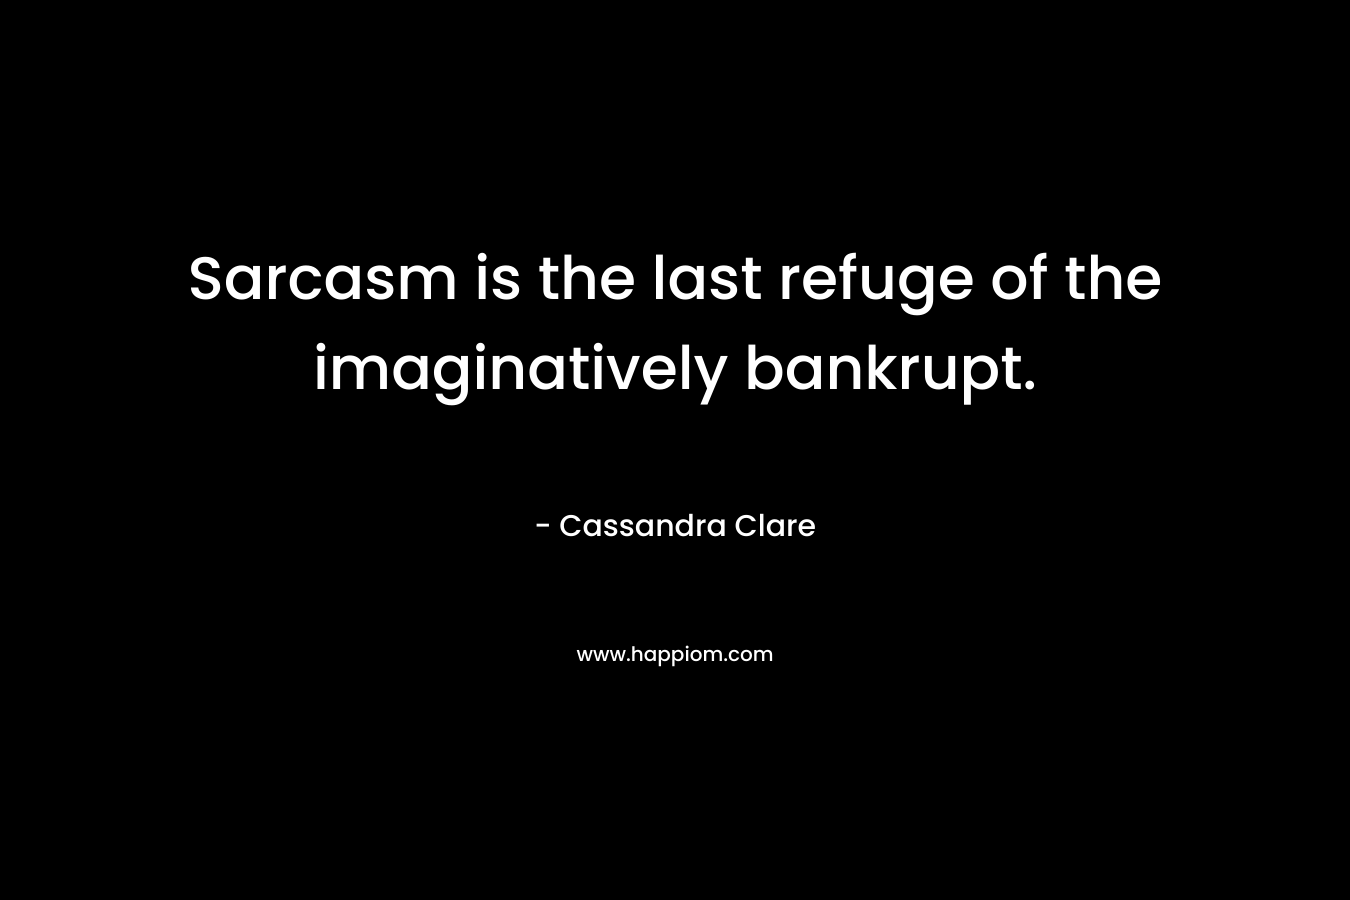 Sarcasm is the last refuge of the imaginatively bankrupt.